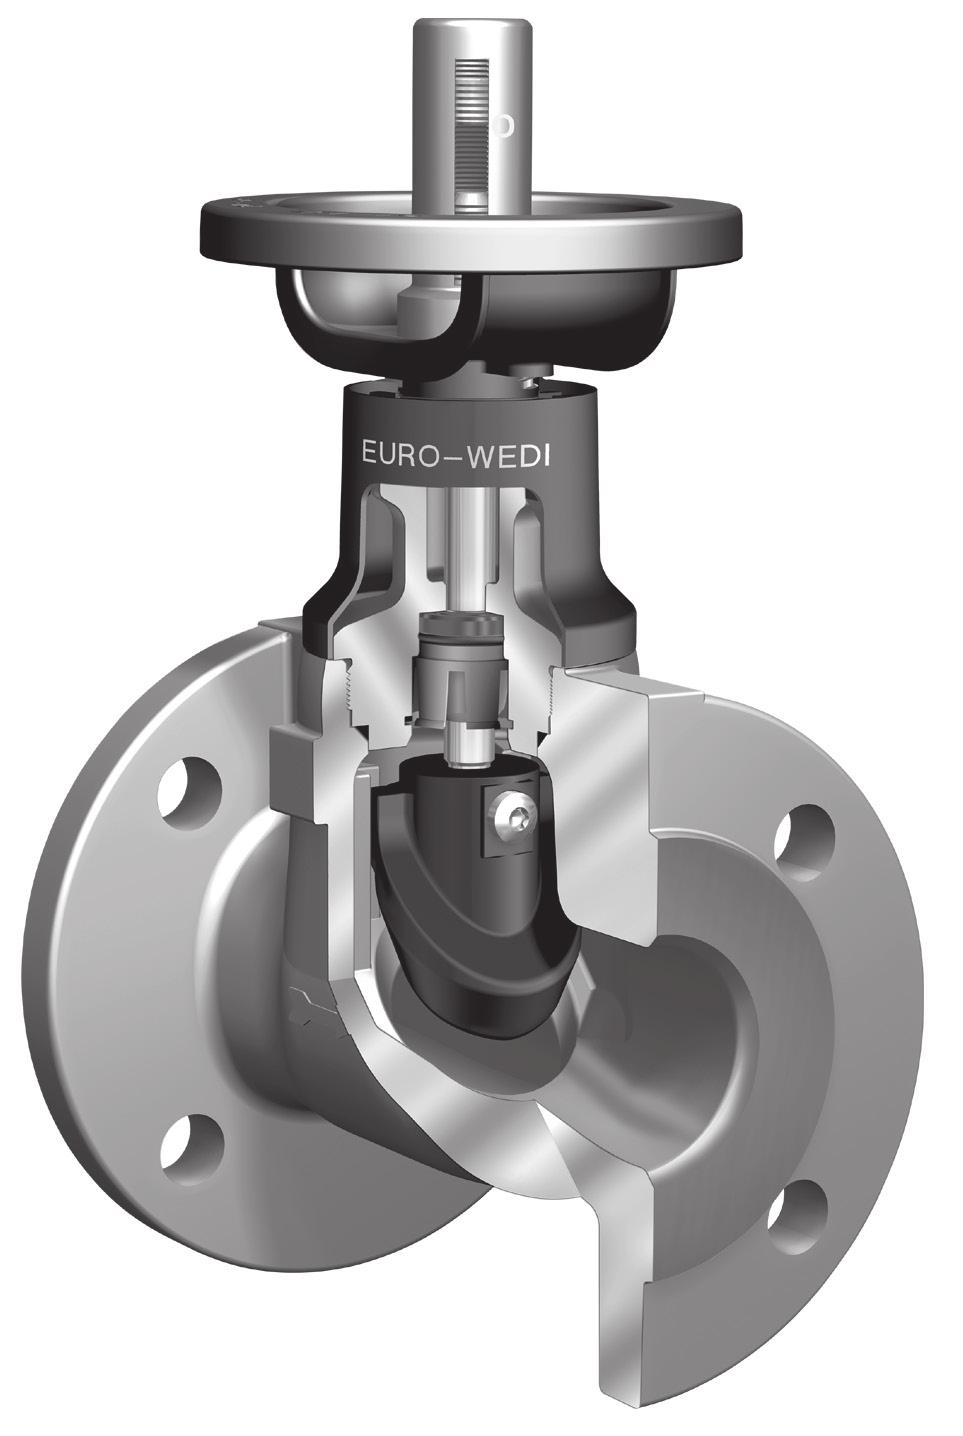 ARI-EURO-WEDI Stop valve with soft seal Free of maintenance stop valve - soft sealed (to 120 C) ARI-EURO-WEDI - Fig. 070 Page 2 ARI-EURO-WEDI - Fig. 071 Page 2 Fig. 070 ARI-EURO-WEDI - Hood valve Fig.